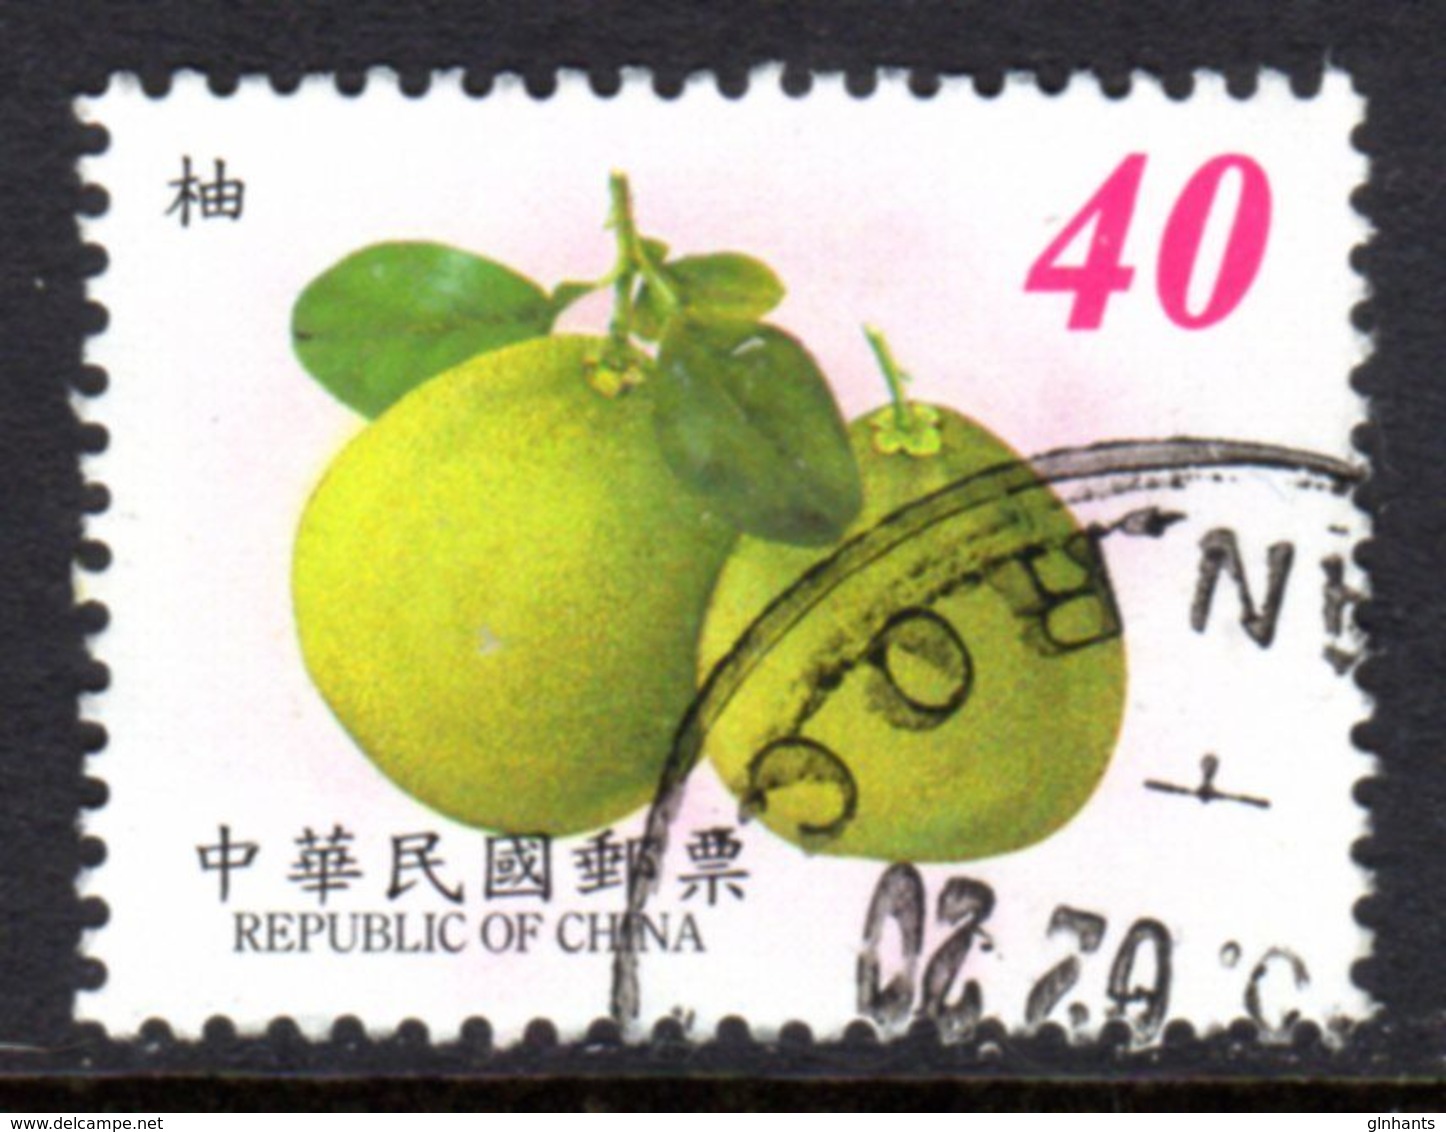 TAIWAN ROC - 2001 FRUITS 2nd SERIES $40 GRAPEFRUIT STAMP FINE USED SG 2735 - Gebruikt